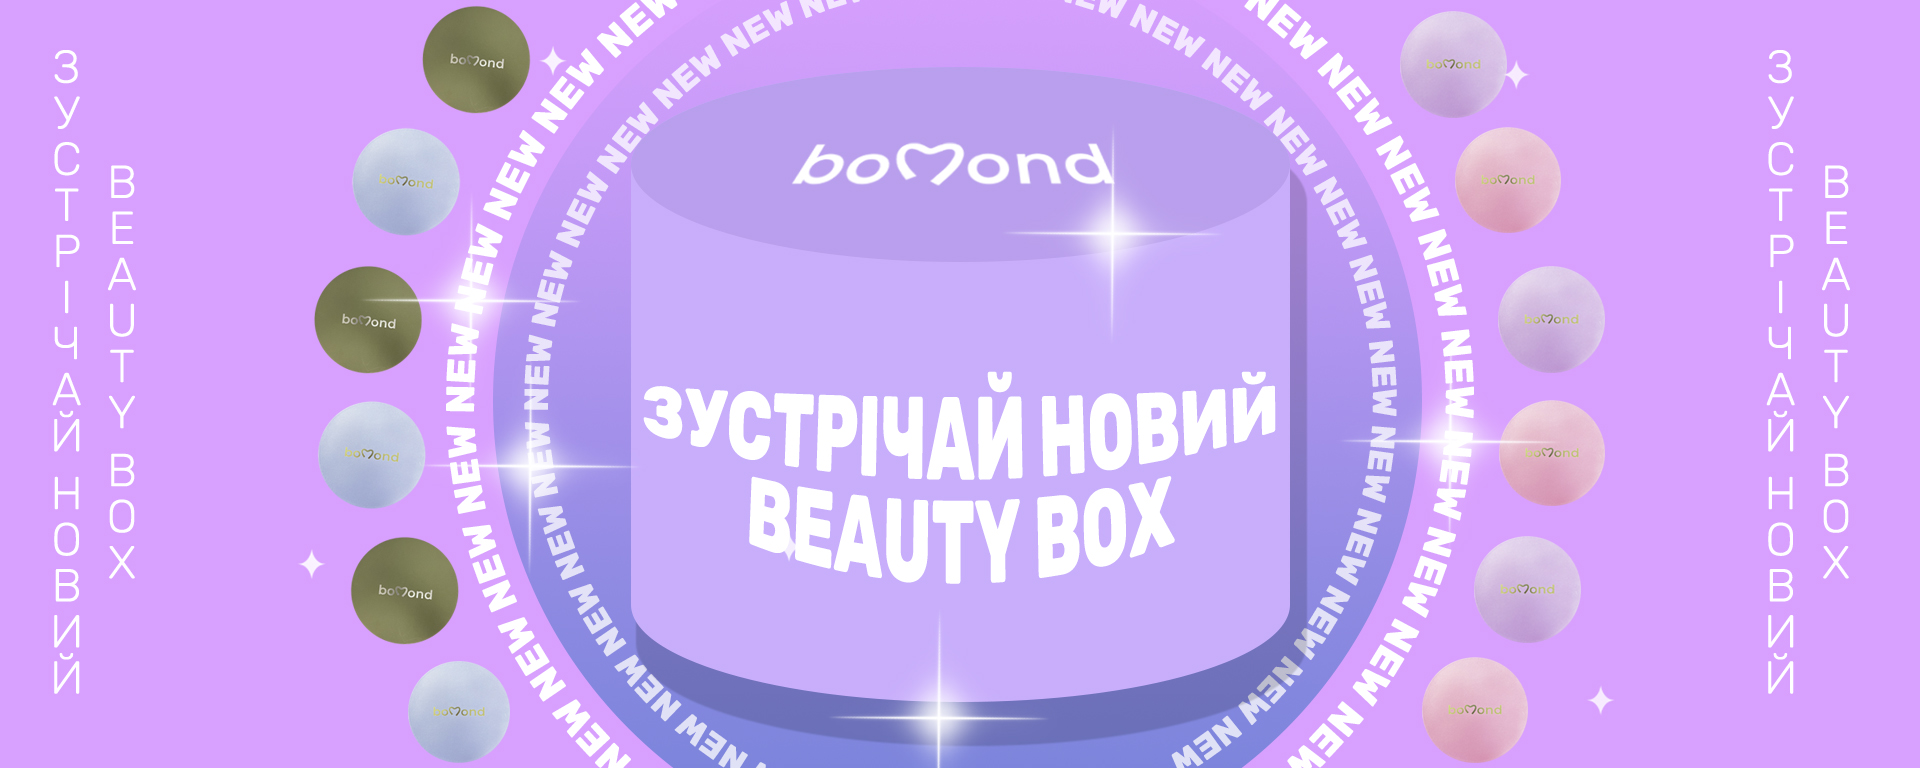 Bomond Beauty Box